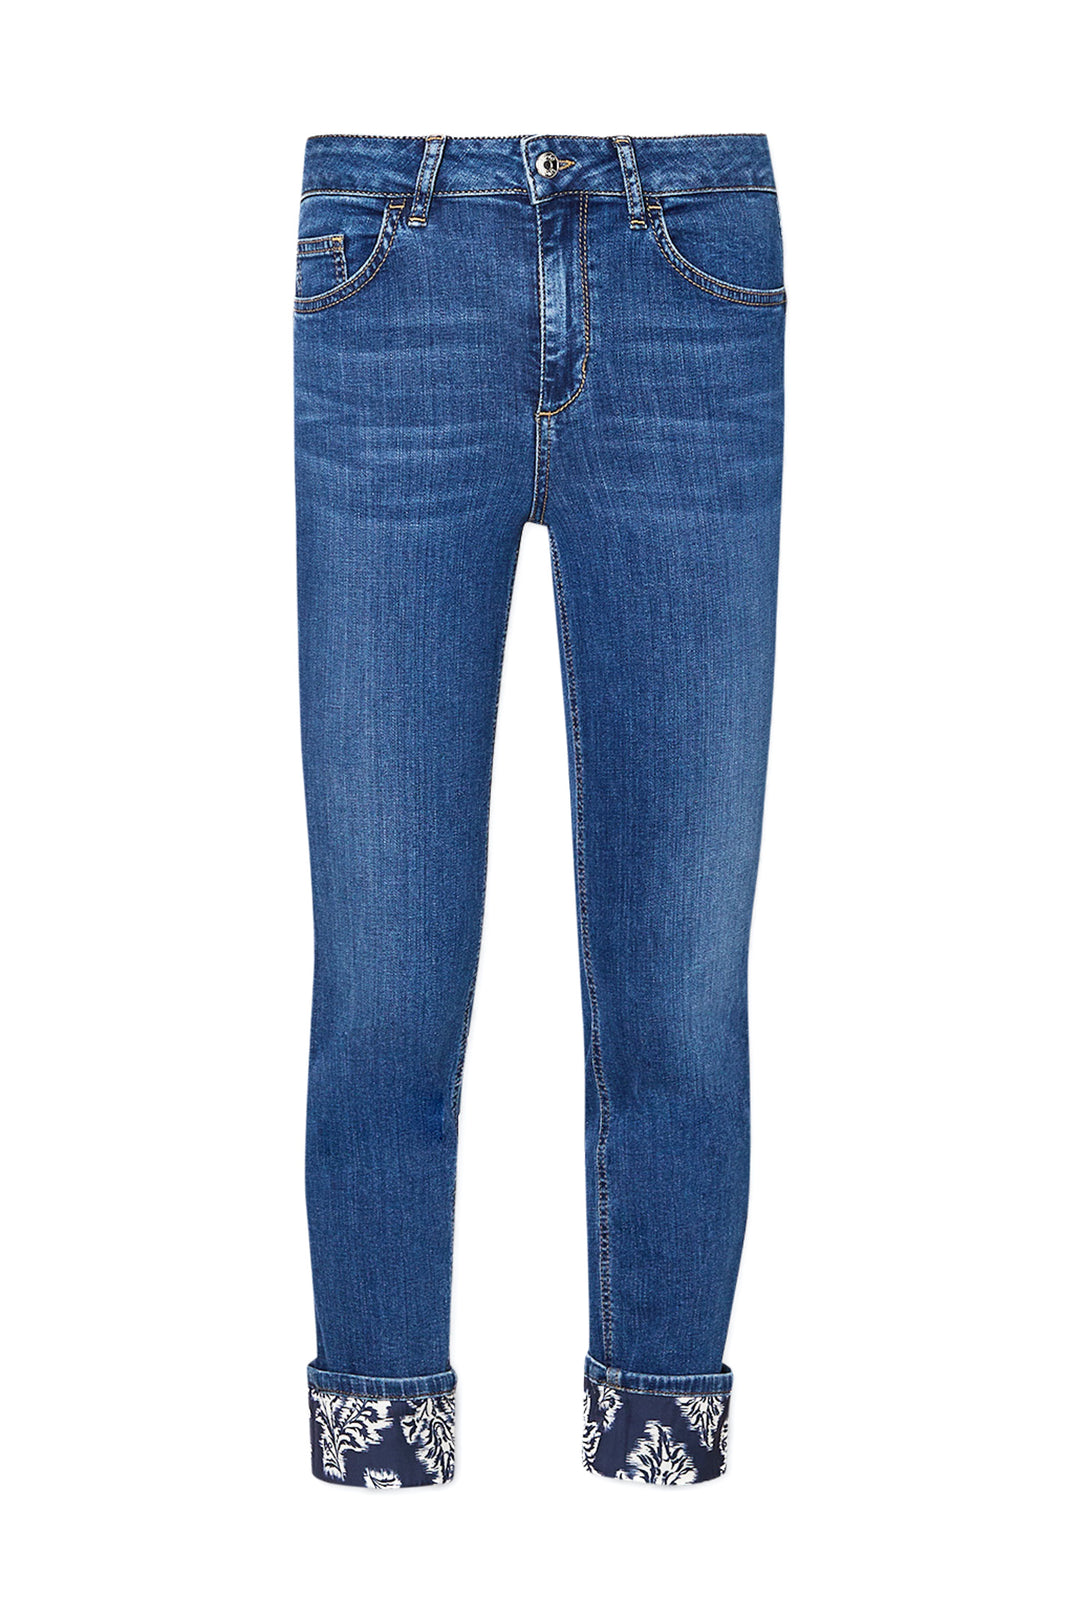 LIU JO Jeans skinny in denim stretch con risvolto - Mancinelli 1954